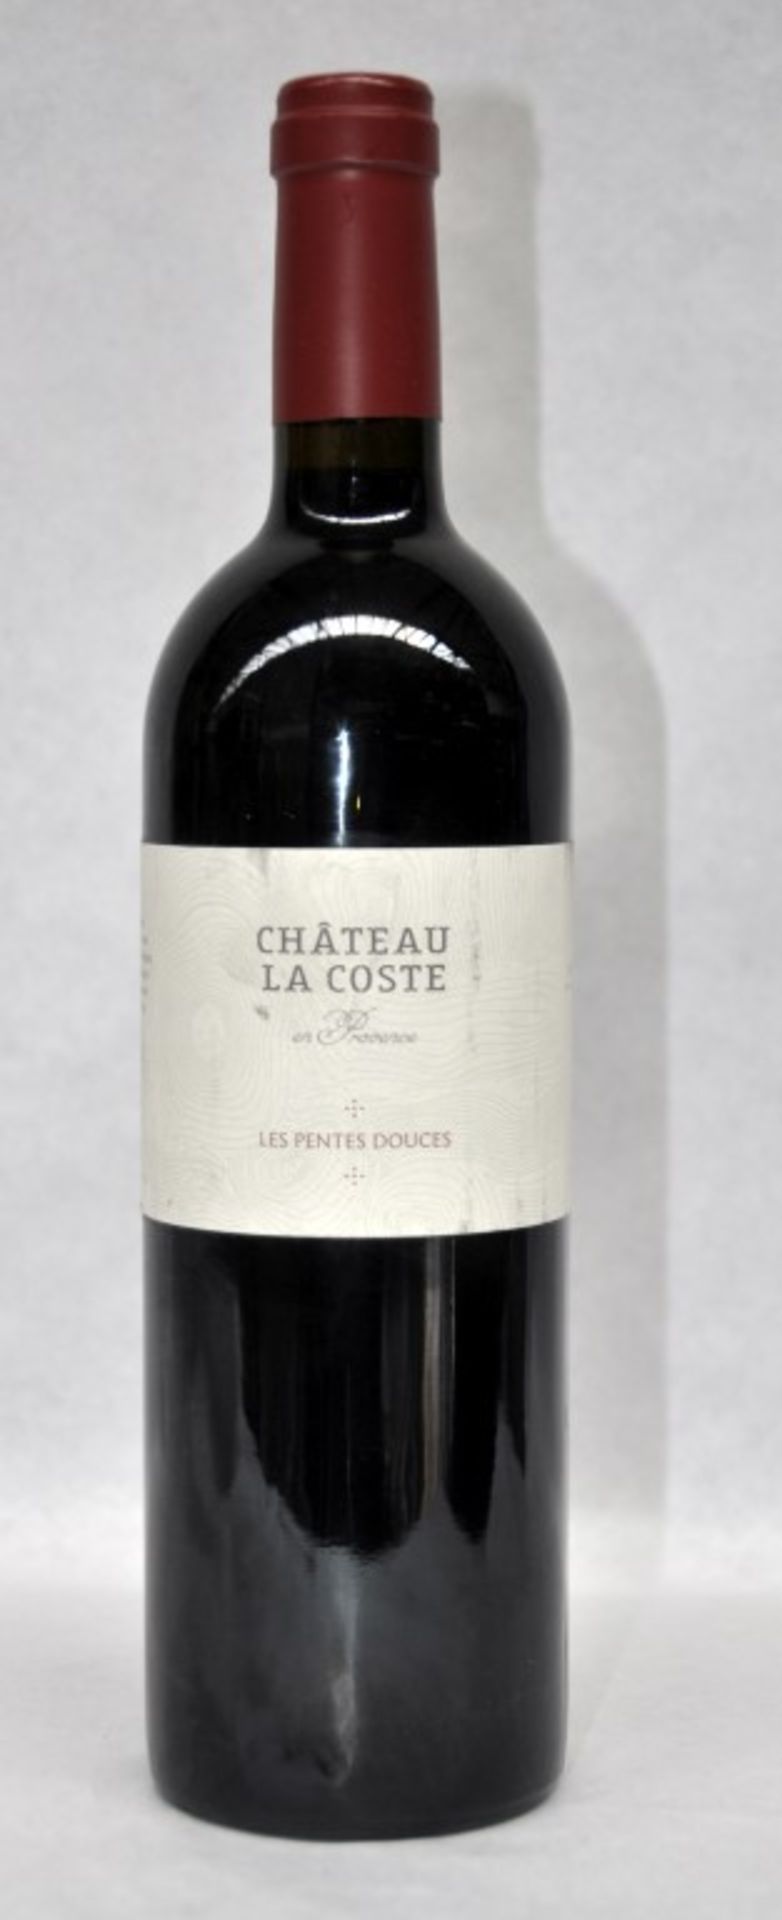 1 x Chateau La Coste Les Pentes Douces Red Wine - French Wine - 2007 - Bottle Size 75cl - Volume 14%